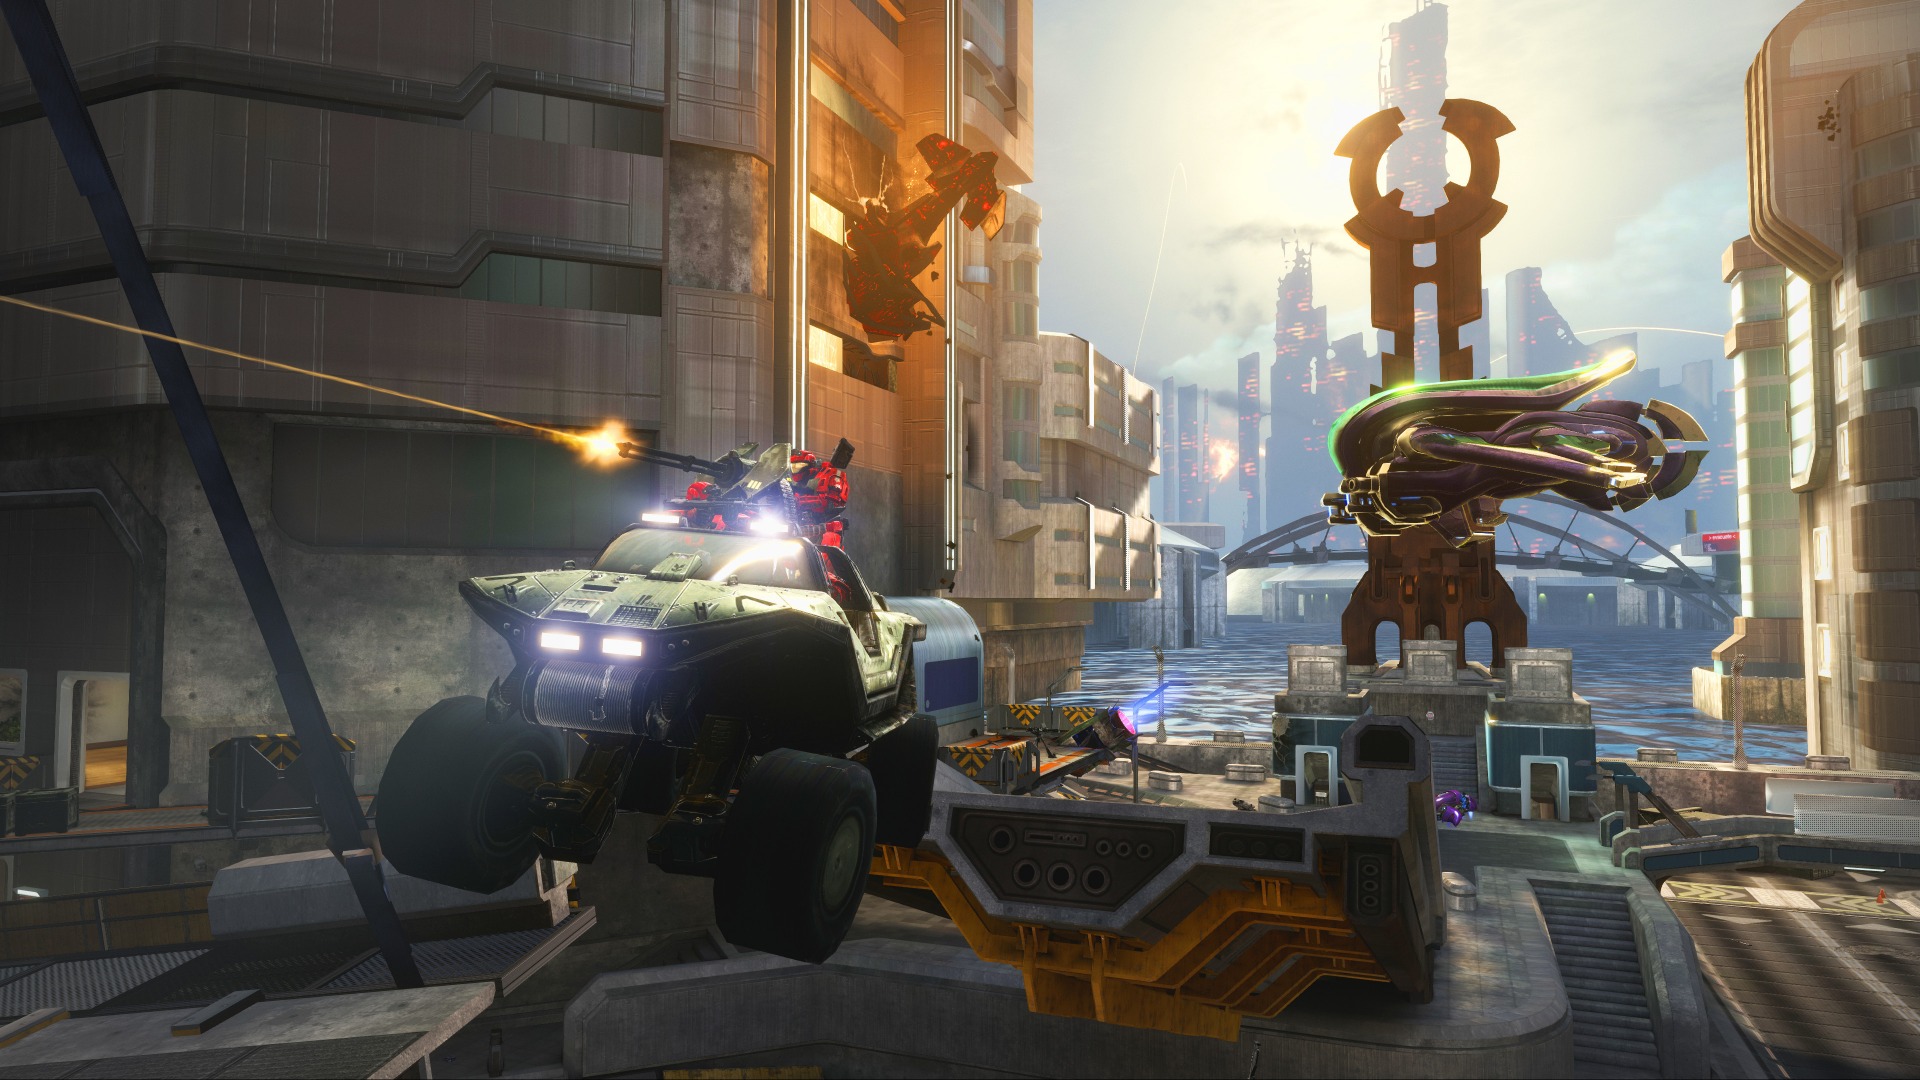 PC・Xbox One版『Halo: Reach』がついに発売。Steamでは同時接続数が15万人を超え『Counter Strike: Global Offensive』と『DOTA 2』に次ぐ第3位に_003